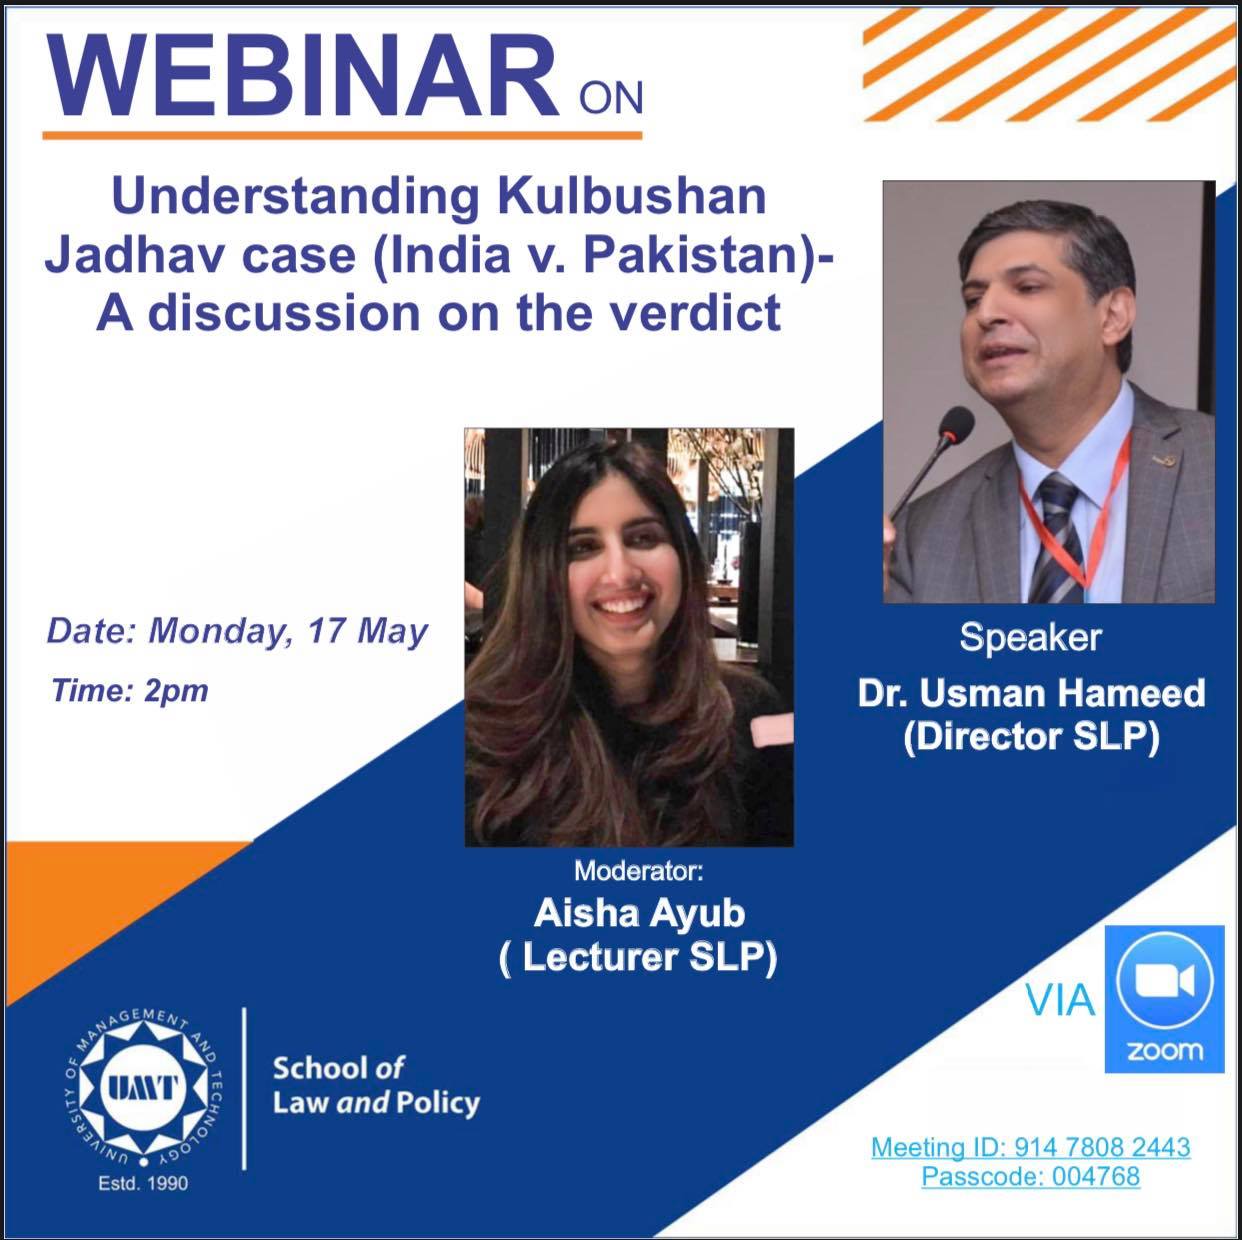 Webinar to Understand Kulbushan Jhadav Case (India vs Pakistan)